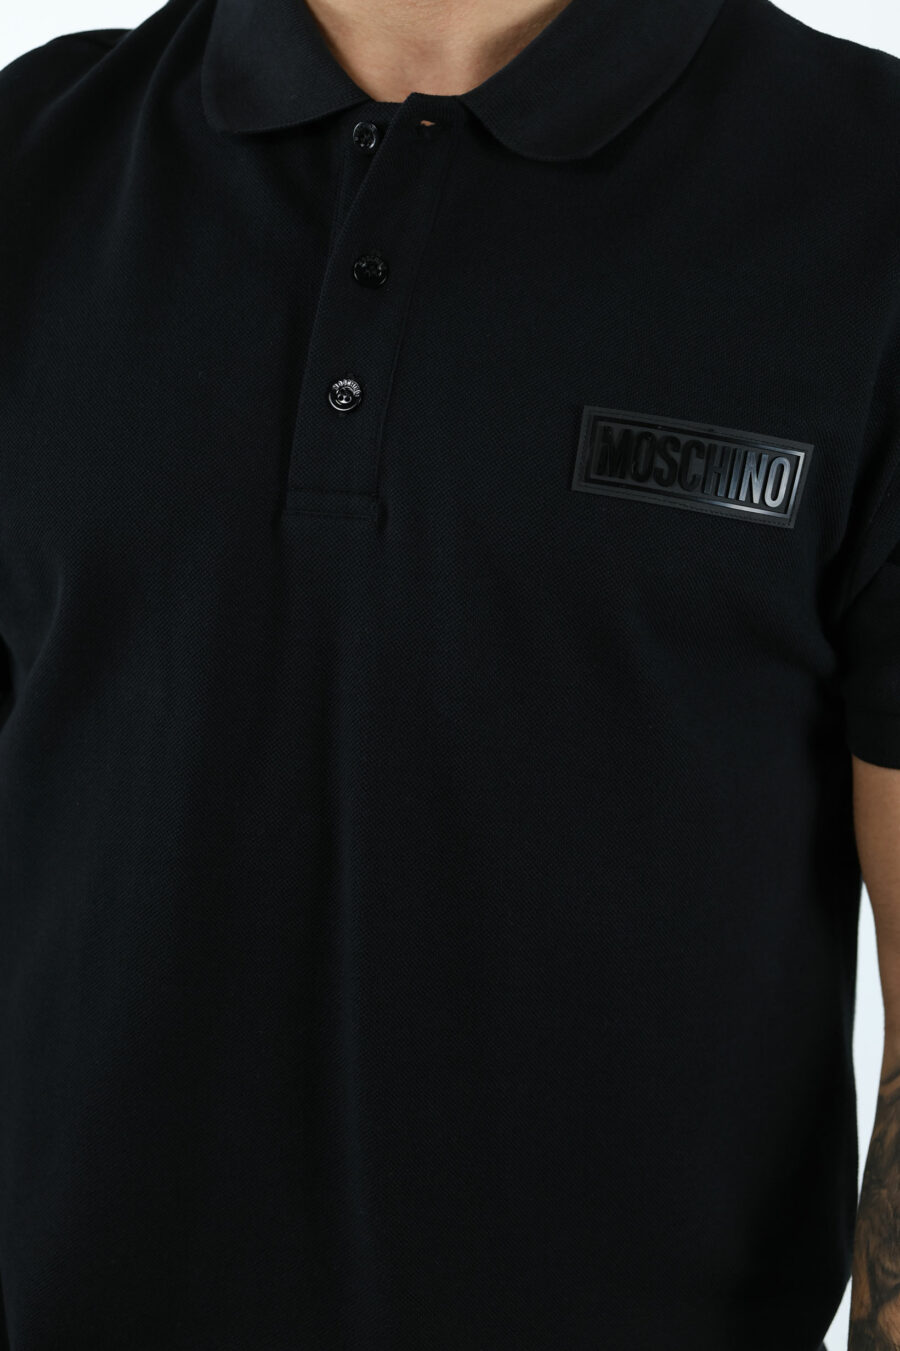 Camiseta negra con minilogo etiqueta blanca - 106966